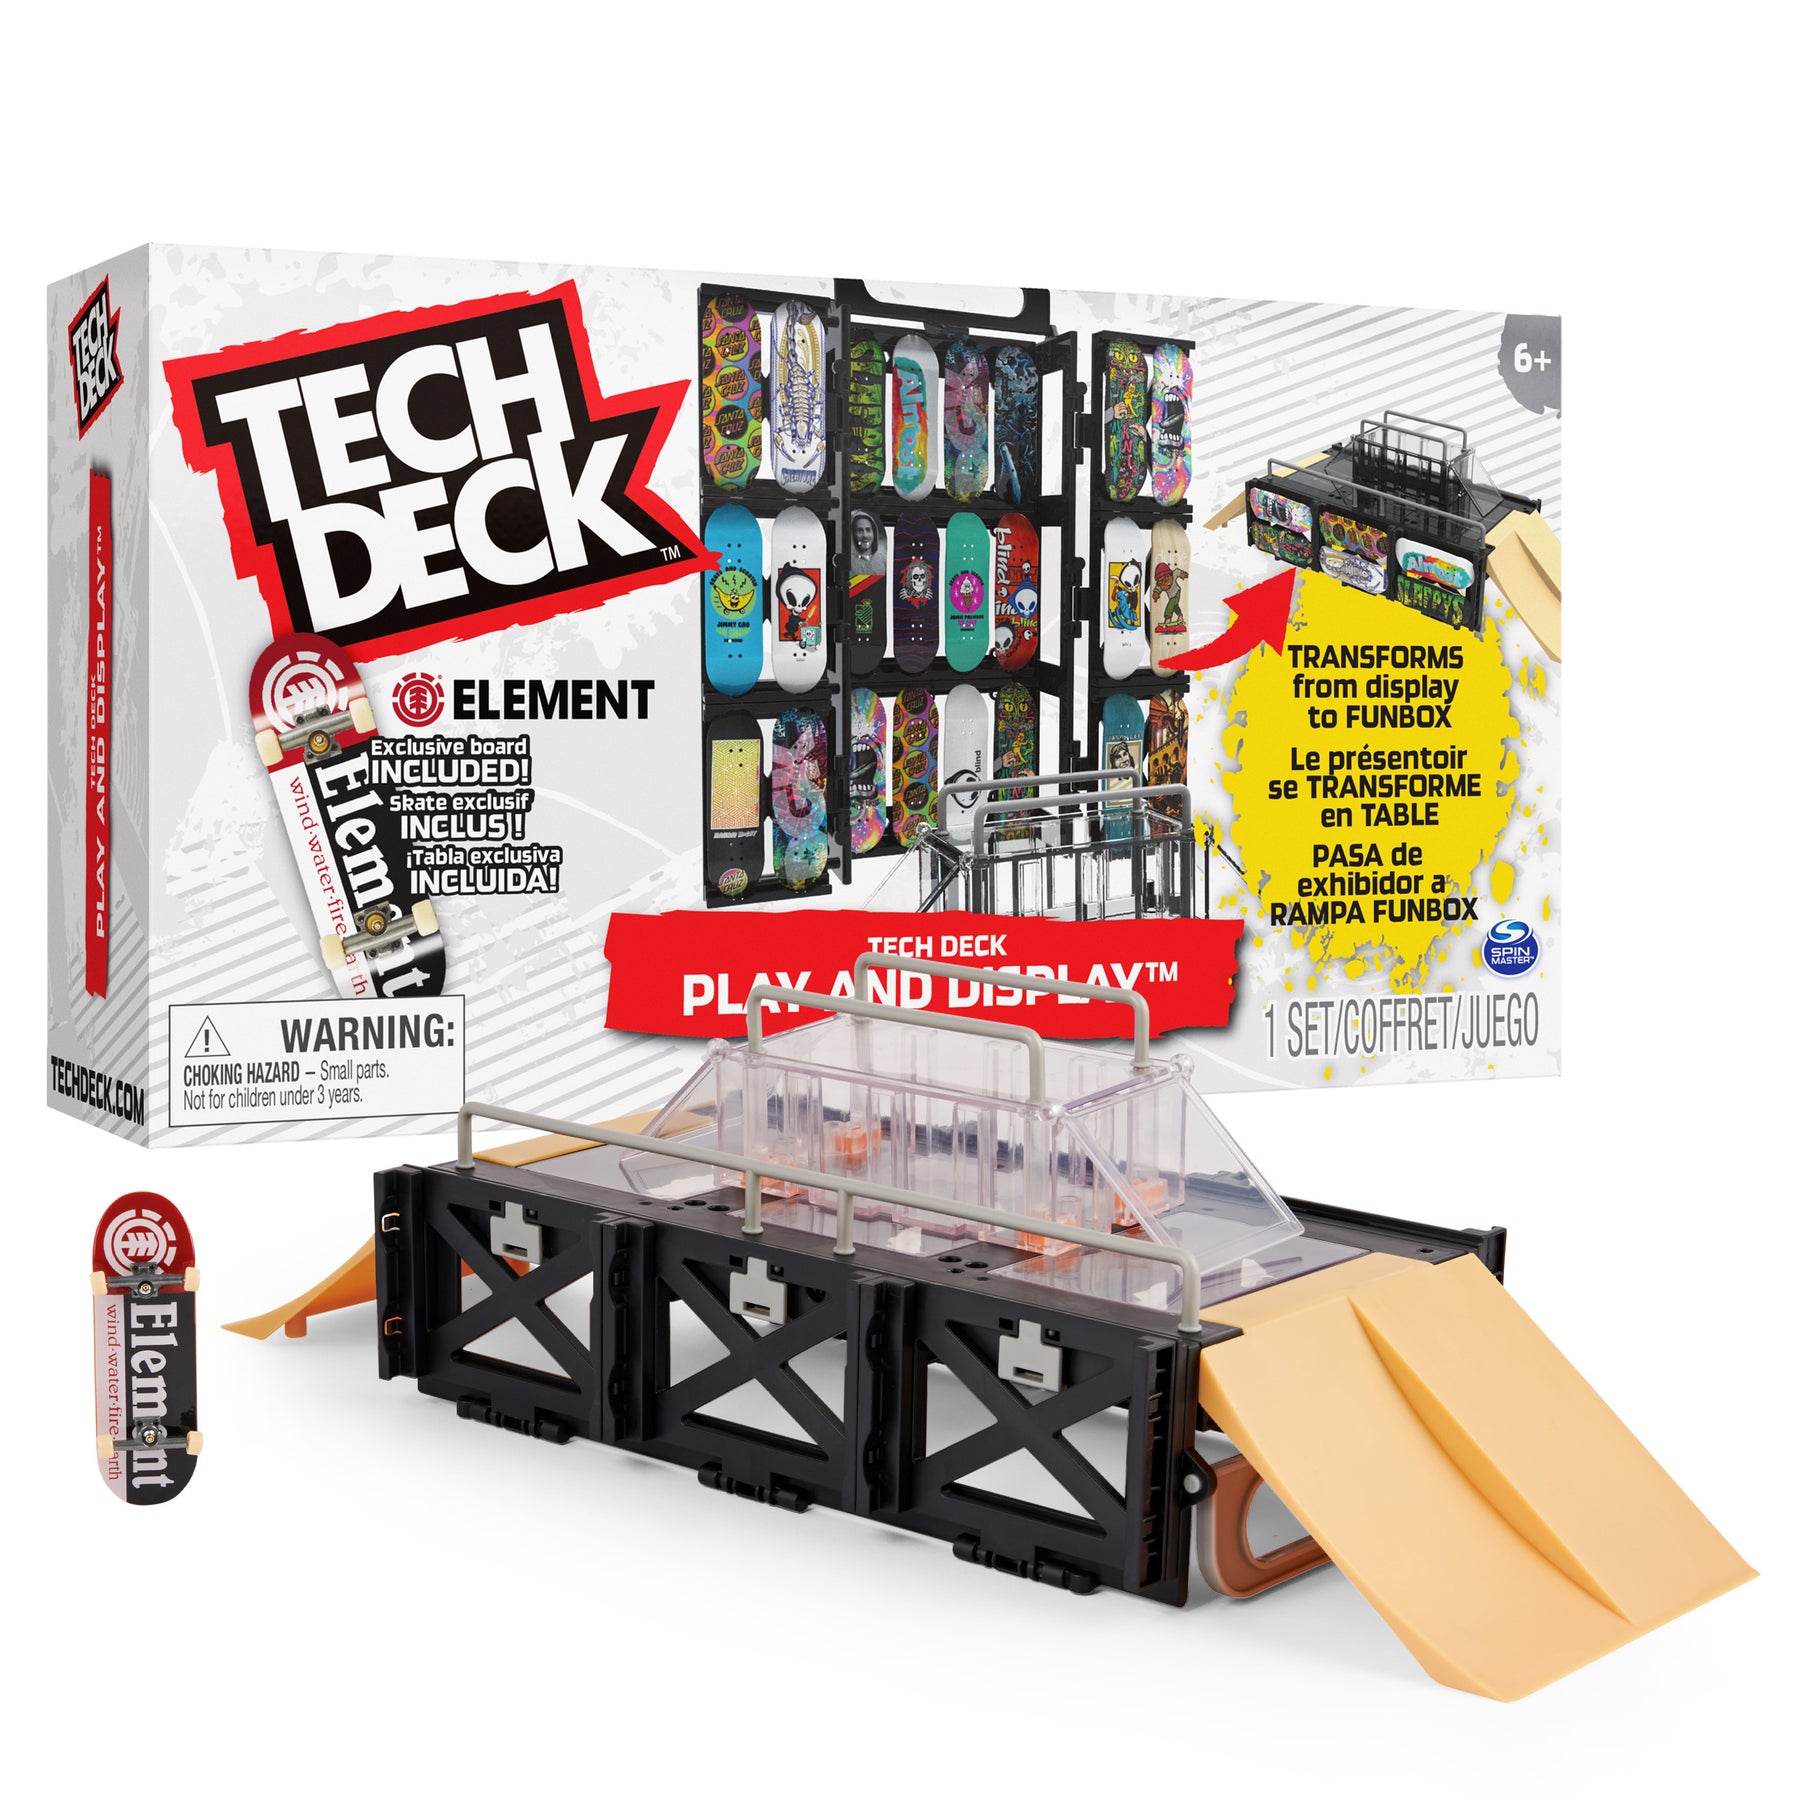 Set 4 tablas - Tech Deck: Finger Skate (96 mm)